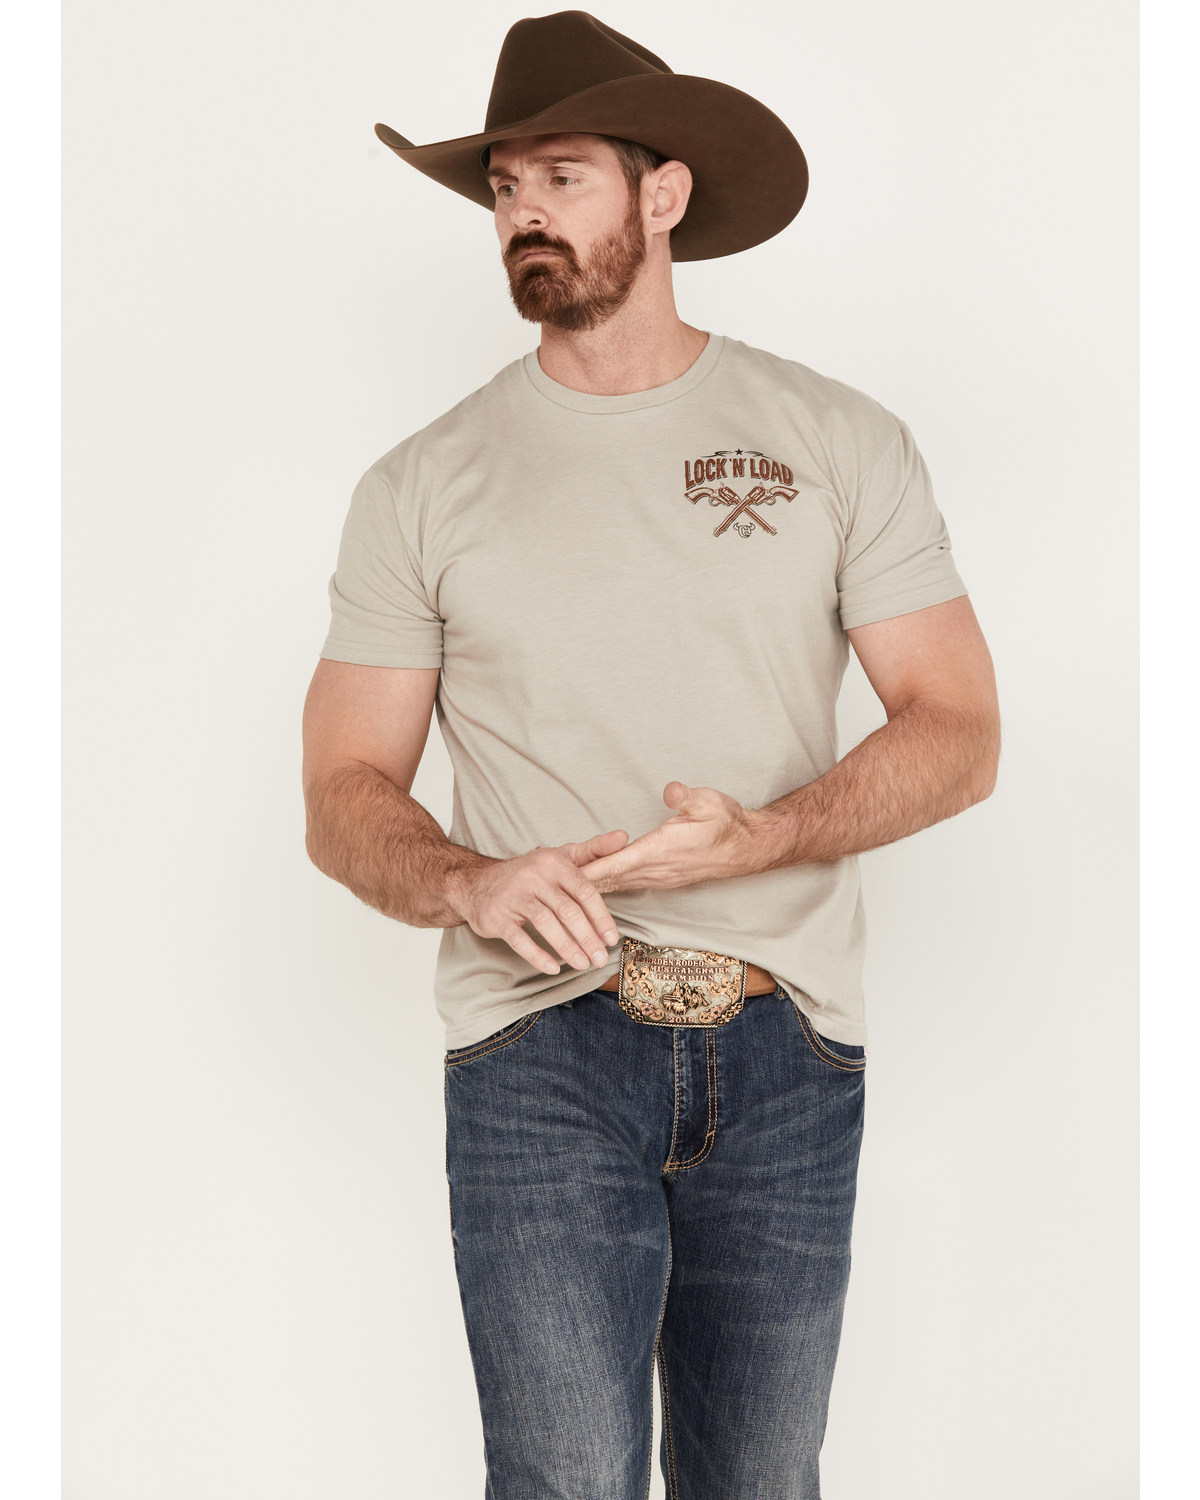 Cowboy Hardware Men's Lock N' Load Short Sleeve Graphic T-Shirt